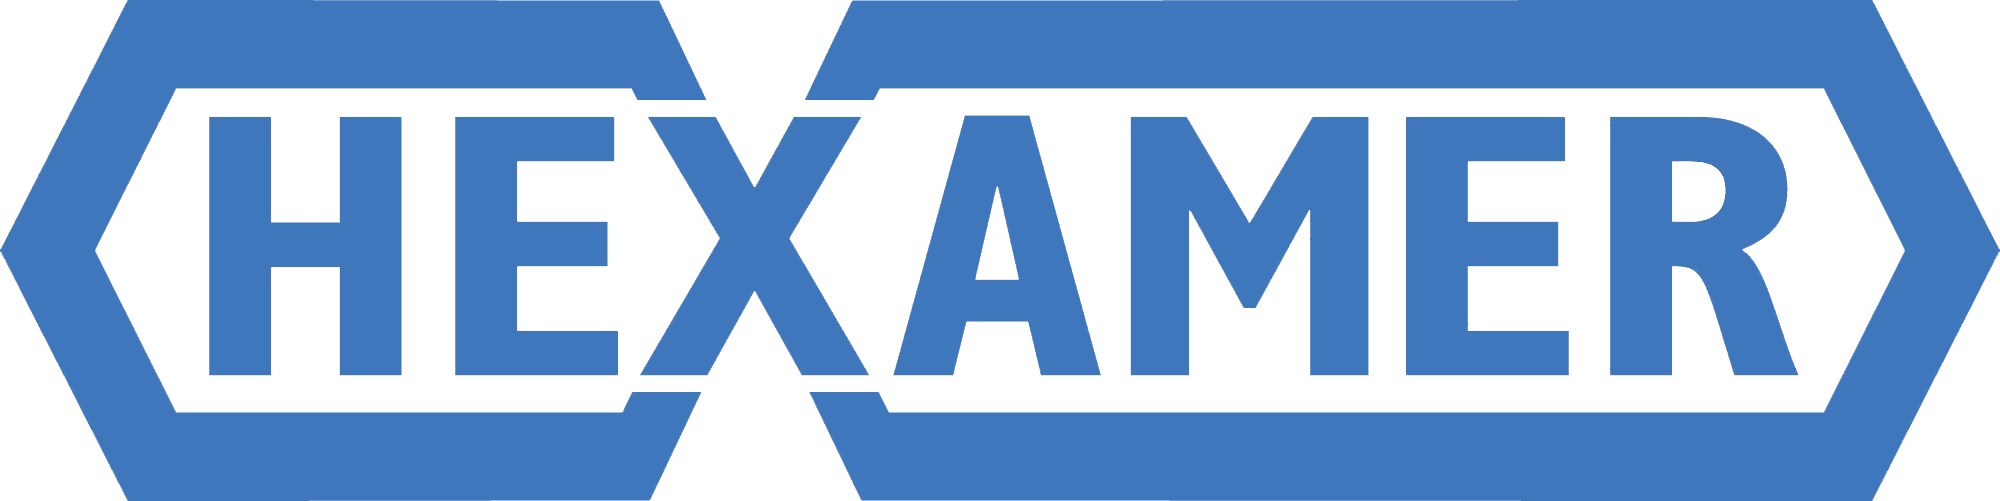 Hexamer-logo kopio